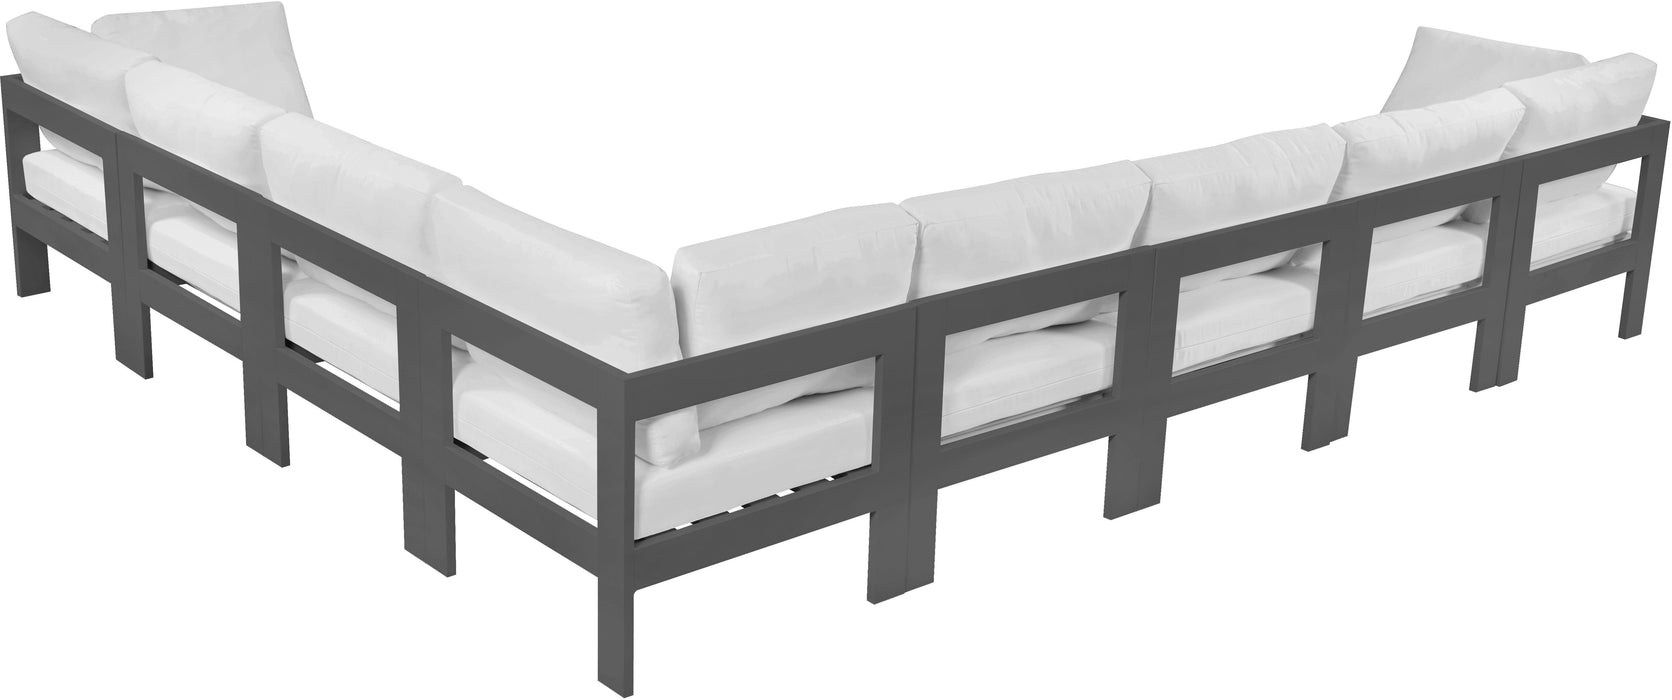 Nizuc - Outdoor Patio Modular Sectional 8 Piece - White - Fabric - Modern & Contemporary